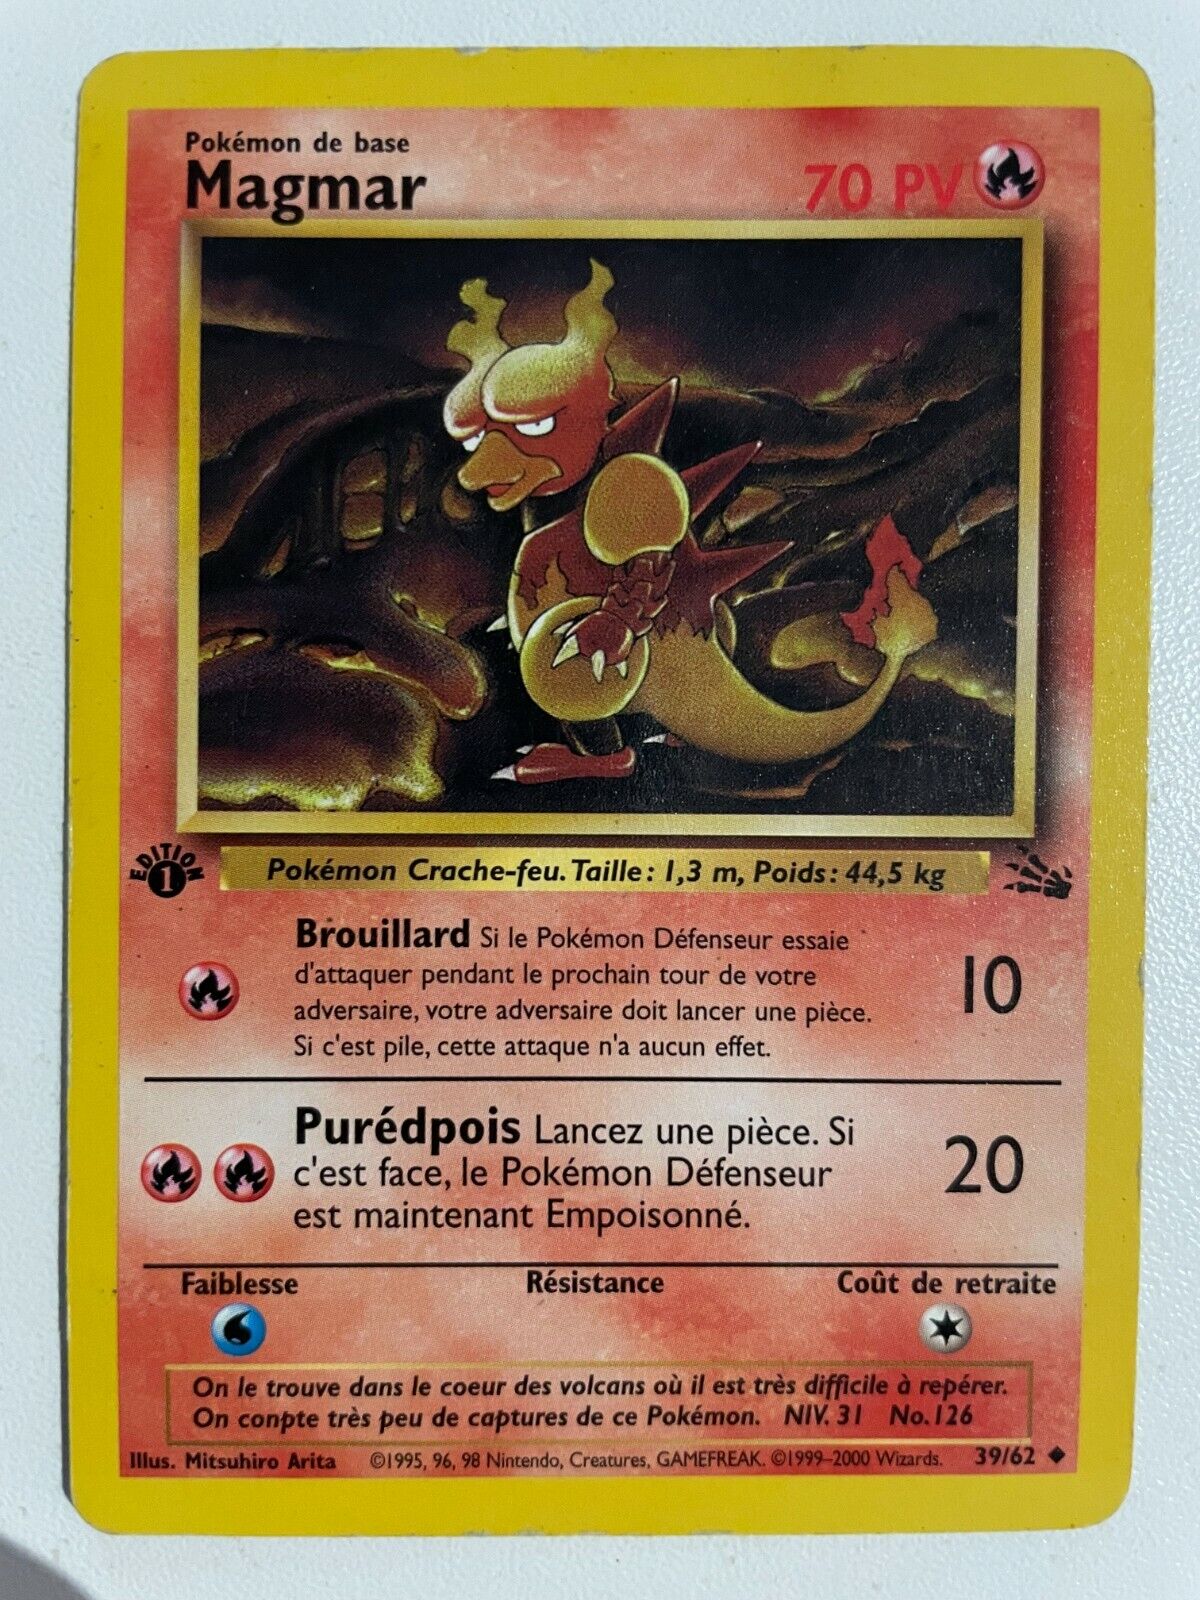 Carte Pokémon | Magmar 39/62 ♦ | Edition 1 | Fossile | Wizards 1999-2000 | FR